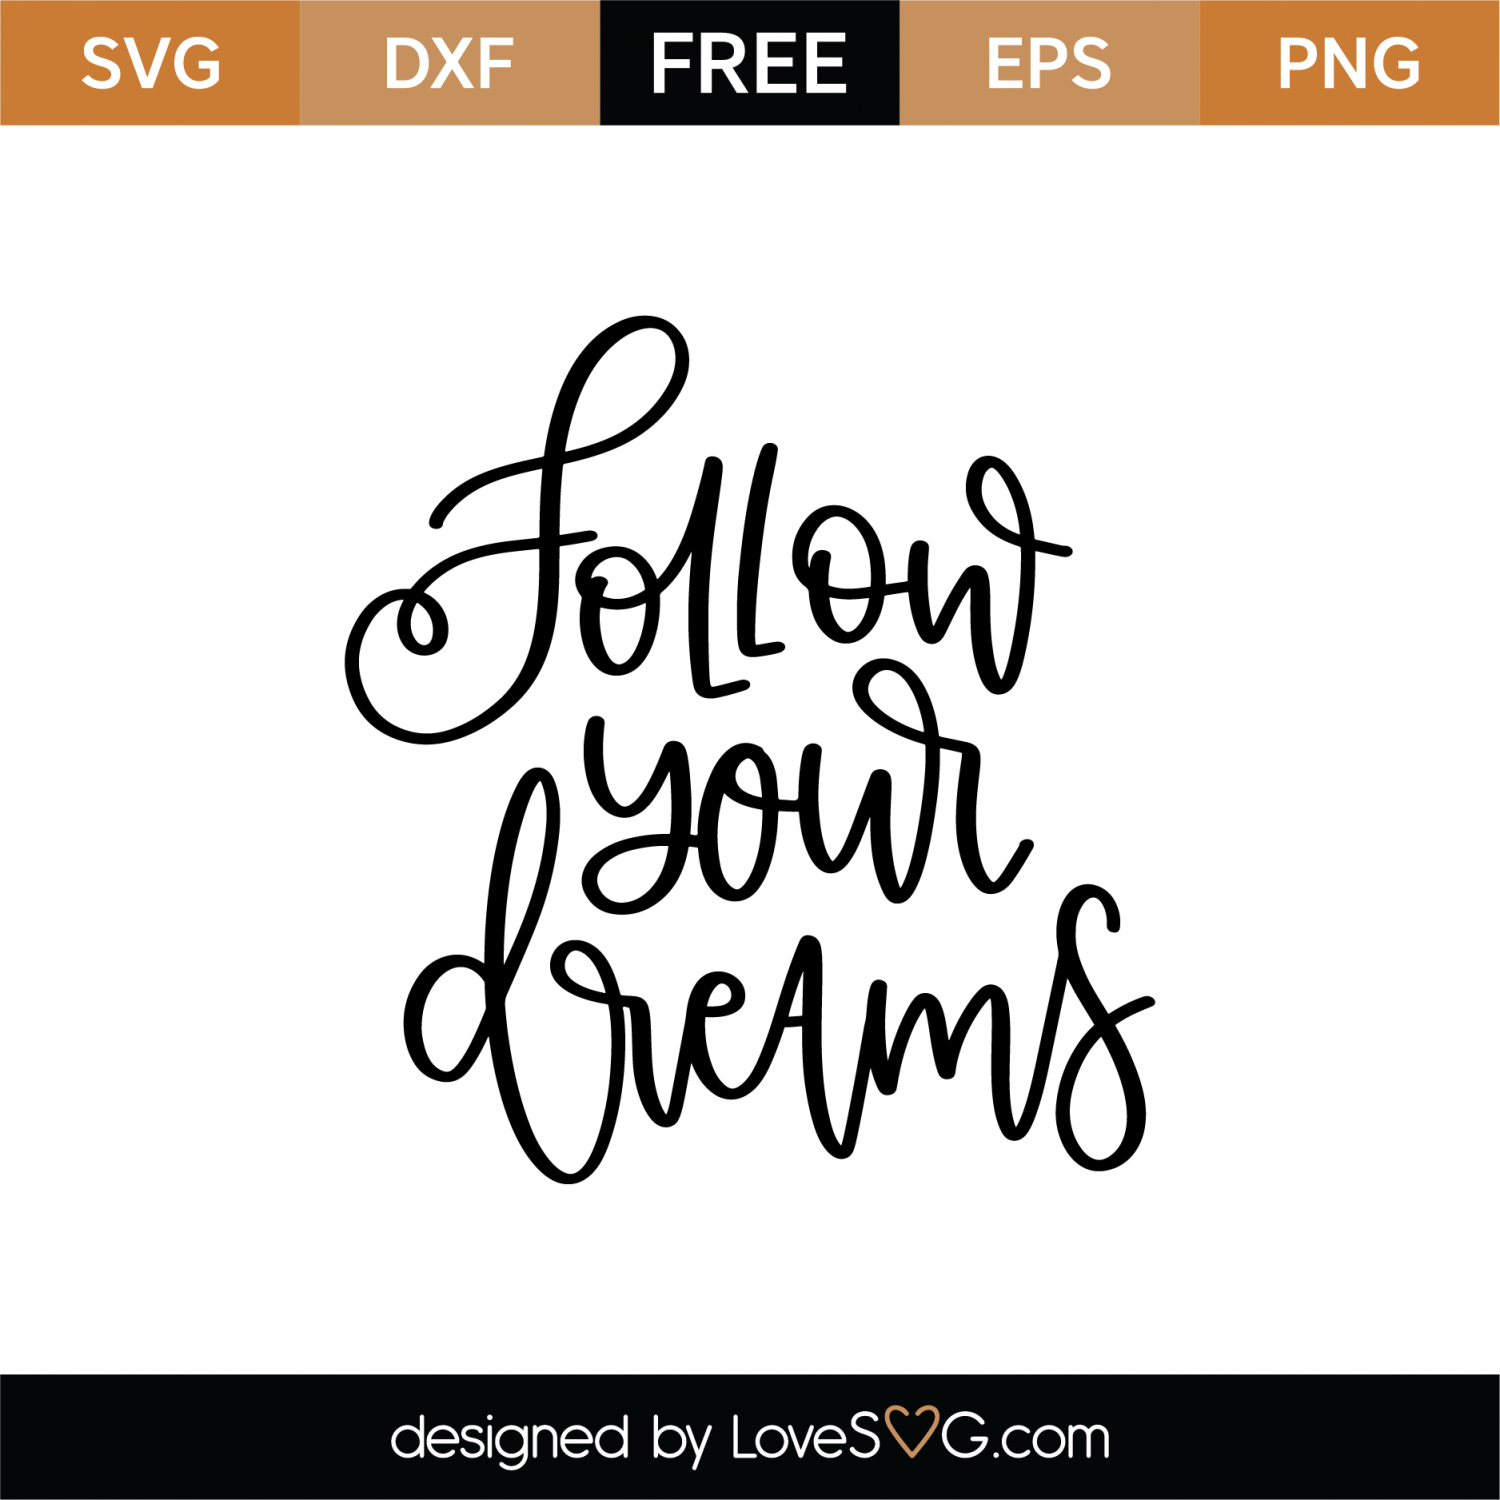 Download Free Follow Your Dreams SVG Cut File | Lovesvg.com